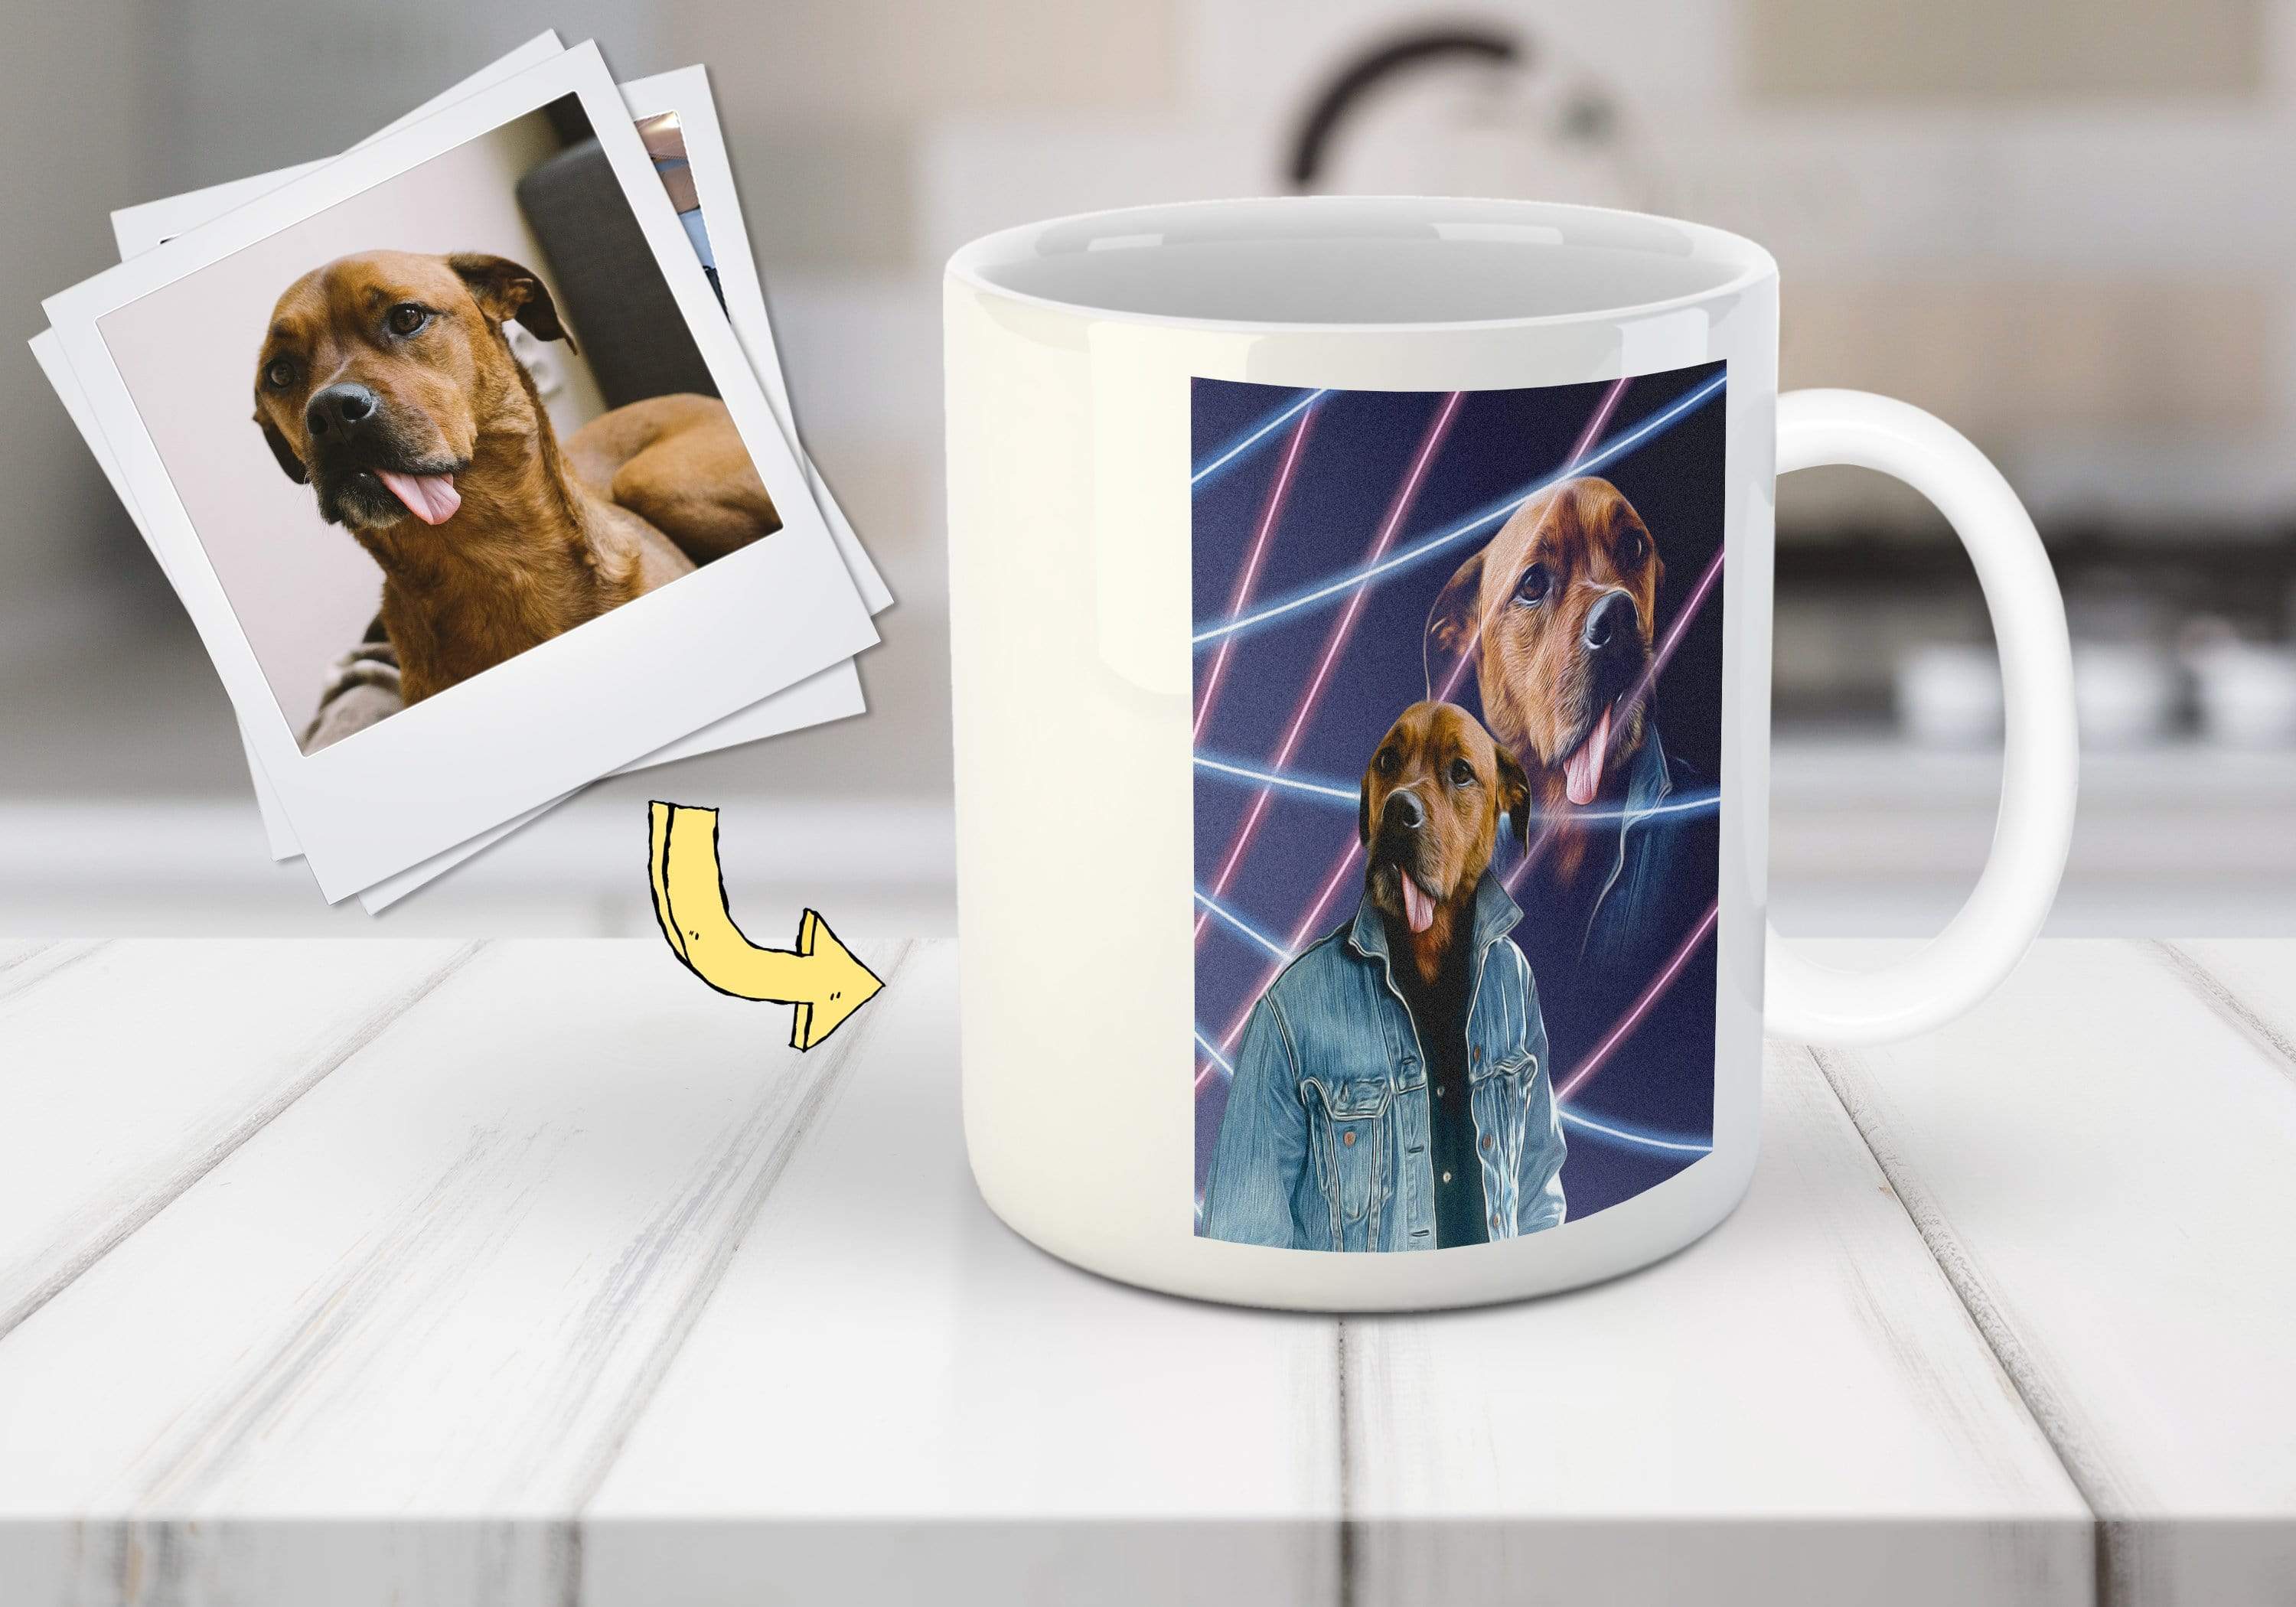 '1980s Lazer Portrait' Personalized Pet Mug